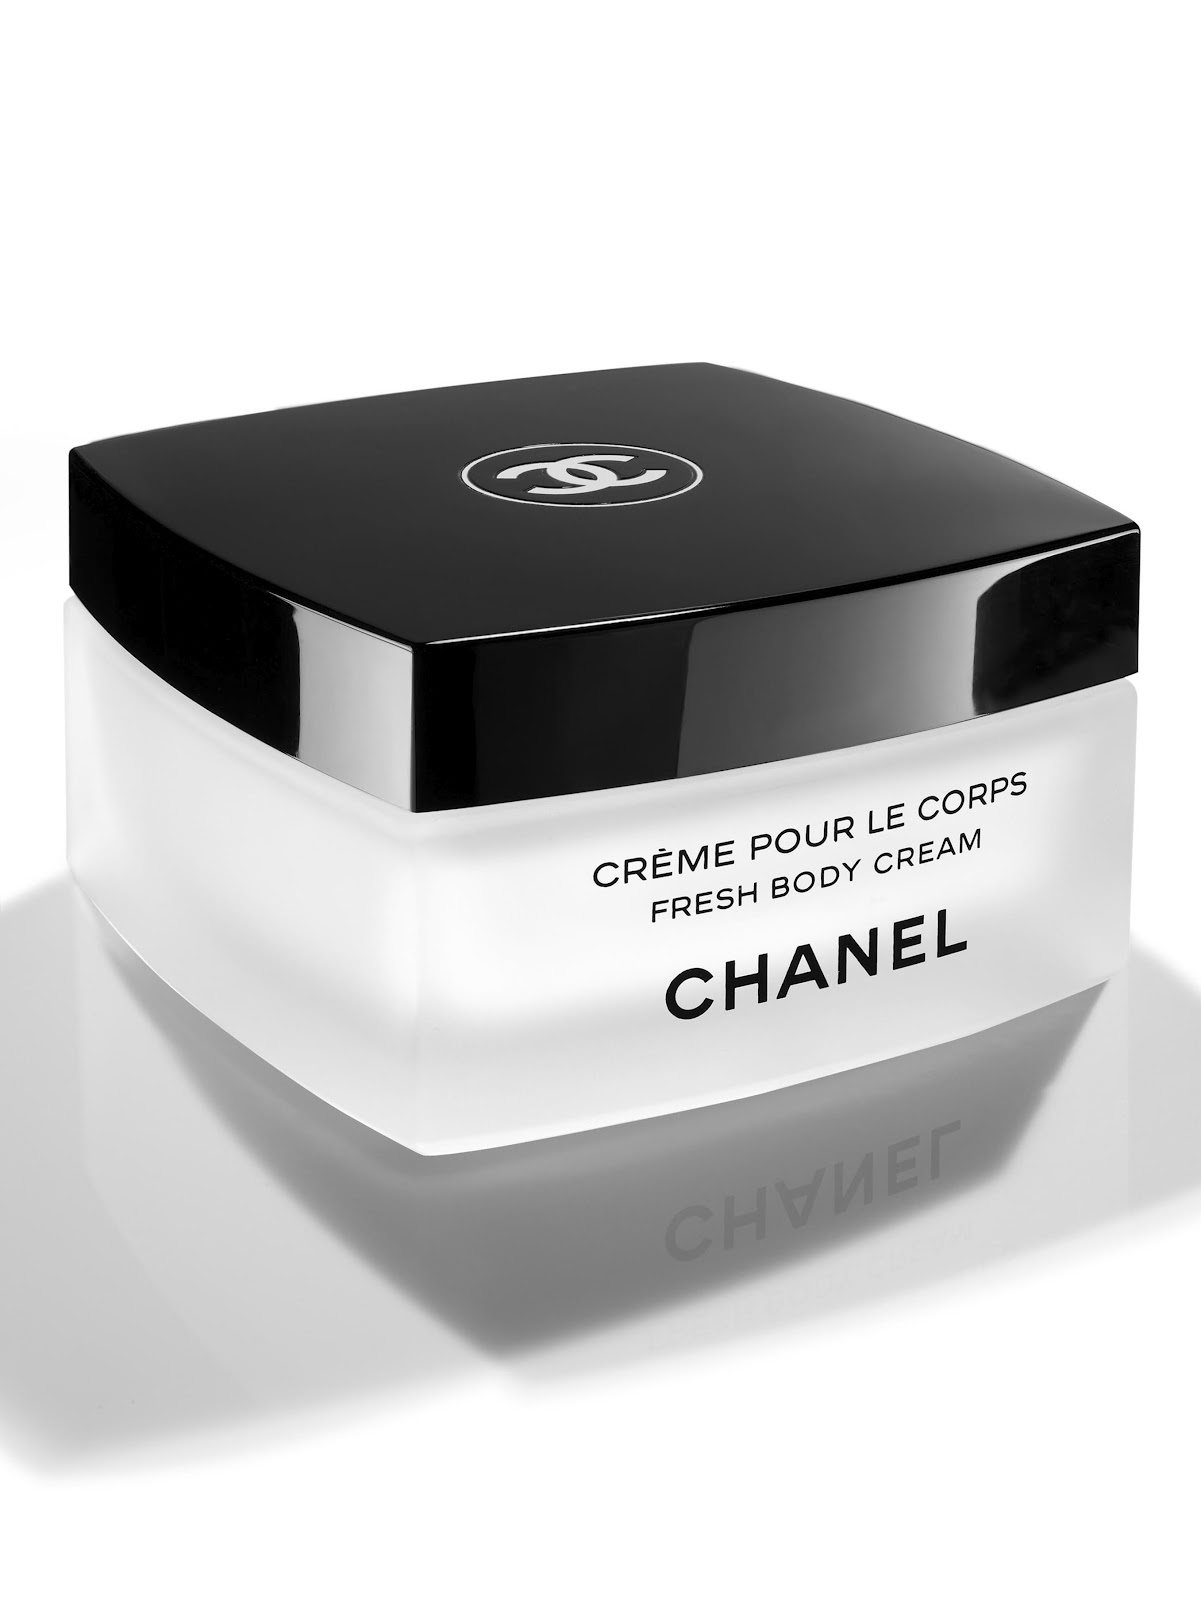 CHANEL Les Exclusifs de Chanel Fresh Body Cream - Size 6g/ 0.21oz